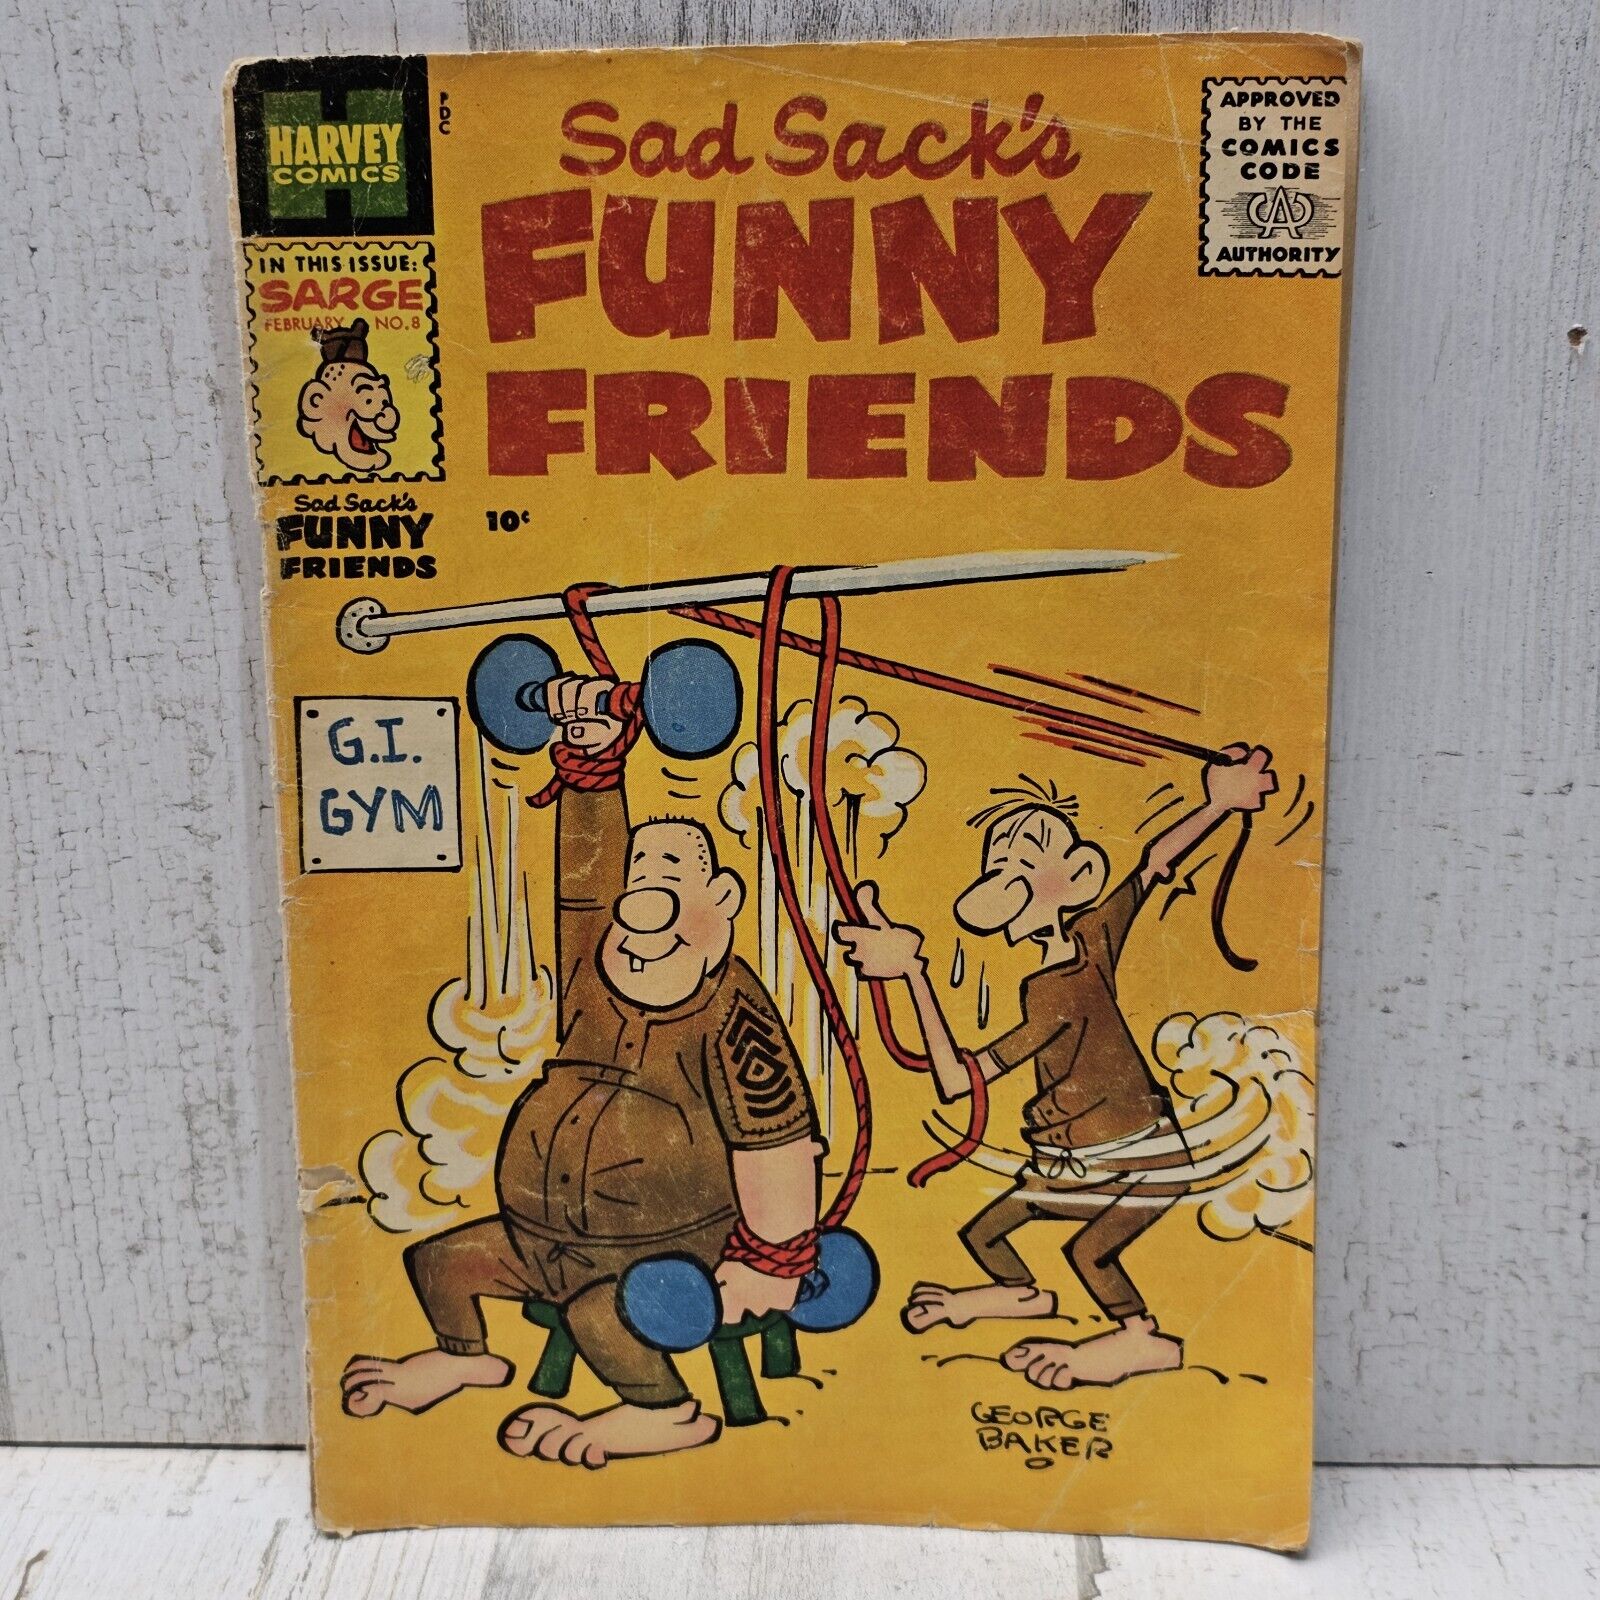 Sad Sack's Funny Friends #8 1957-Harvey-George Baker art-G